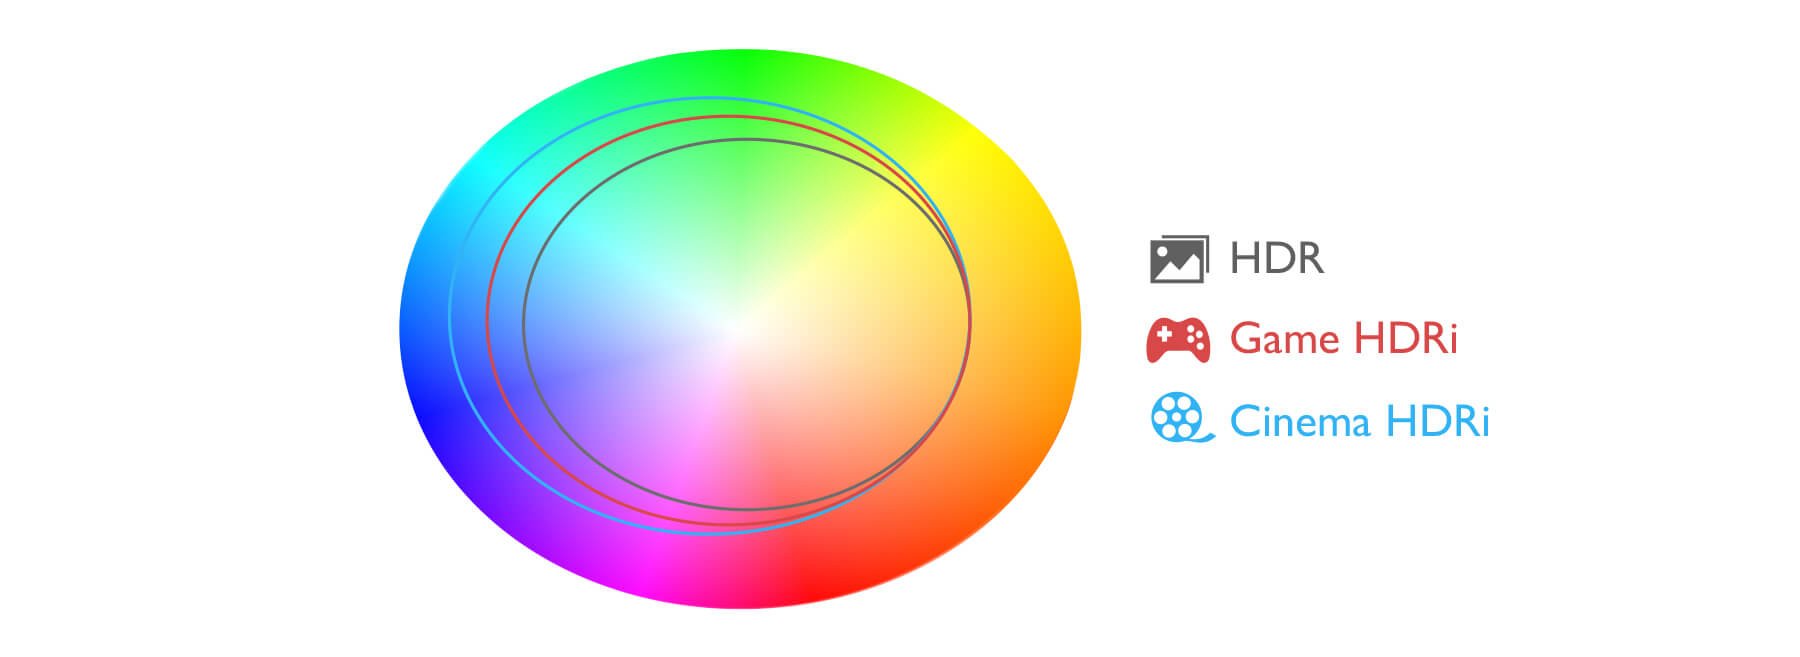 BenQ monitor HDRi technology makes colours richer and more vivid